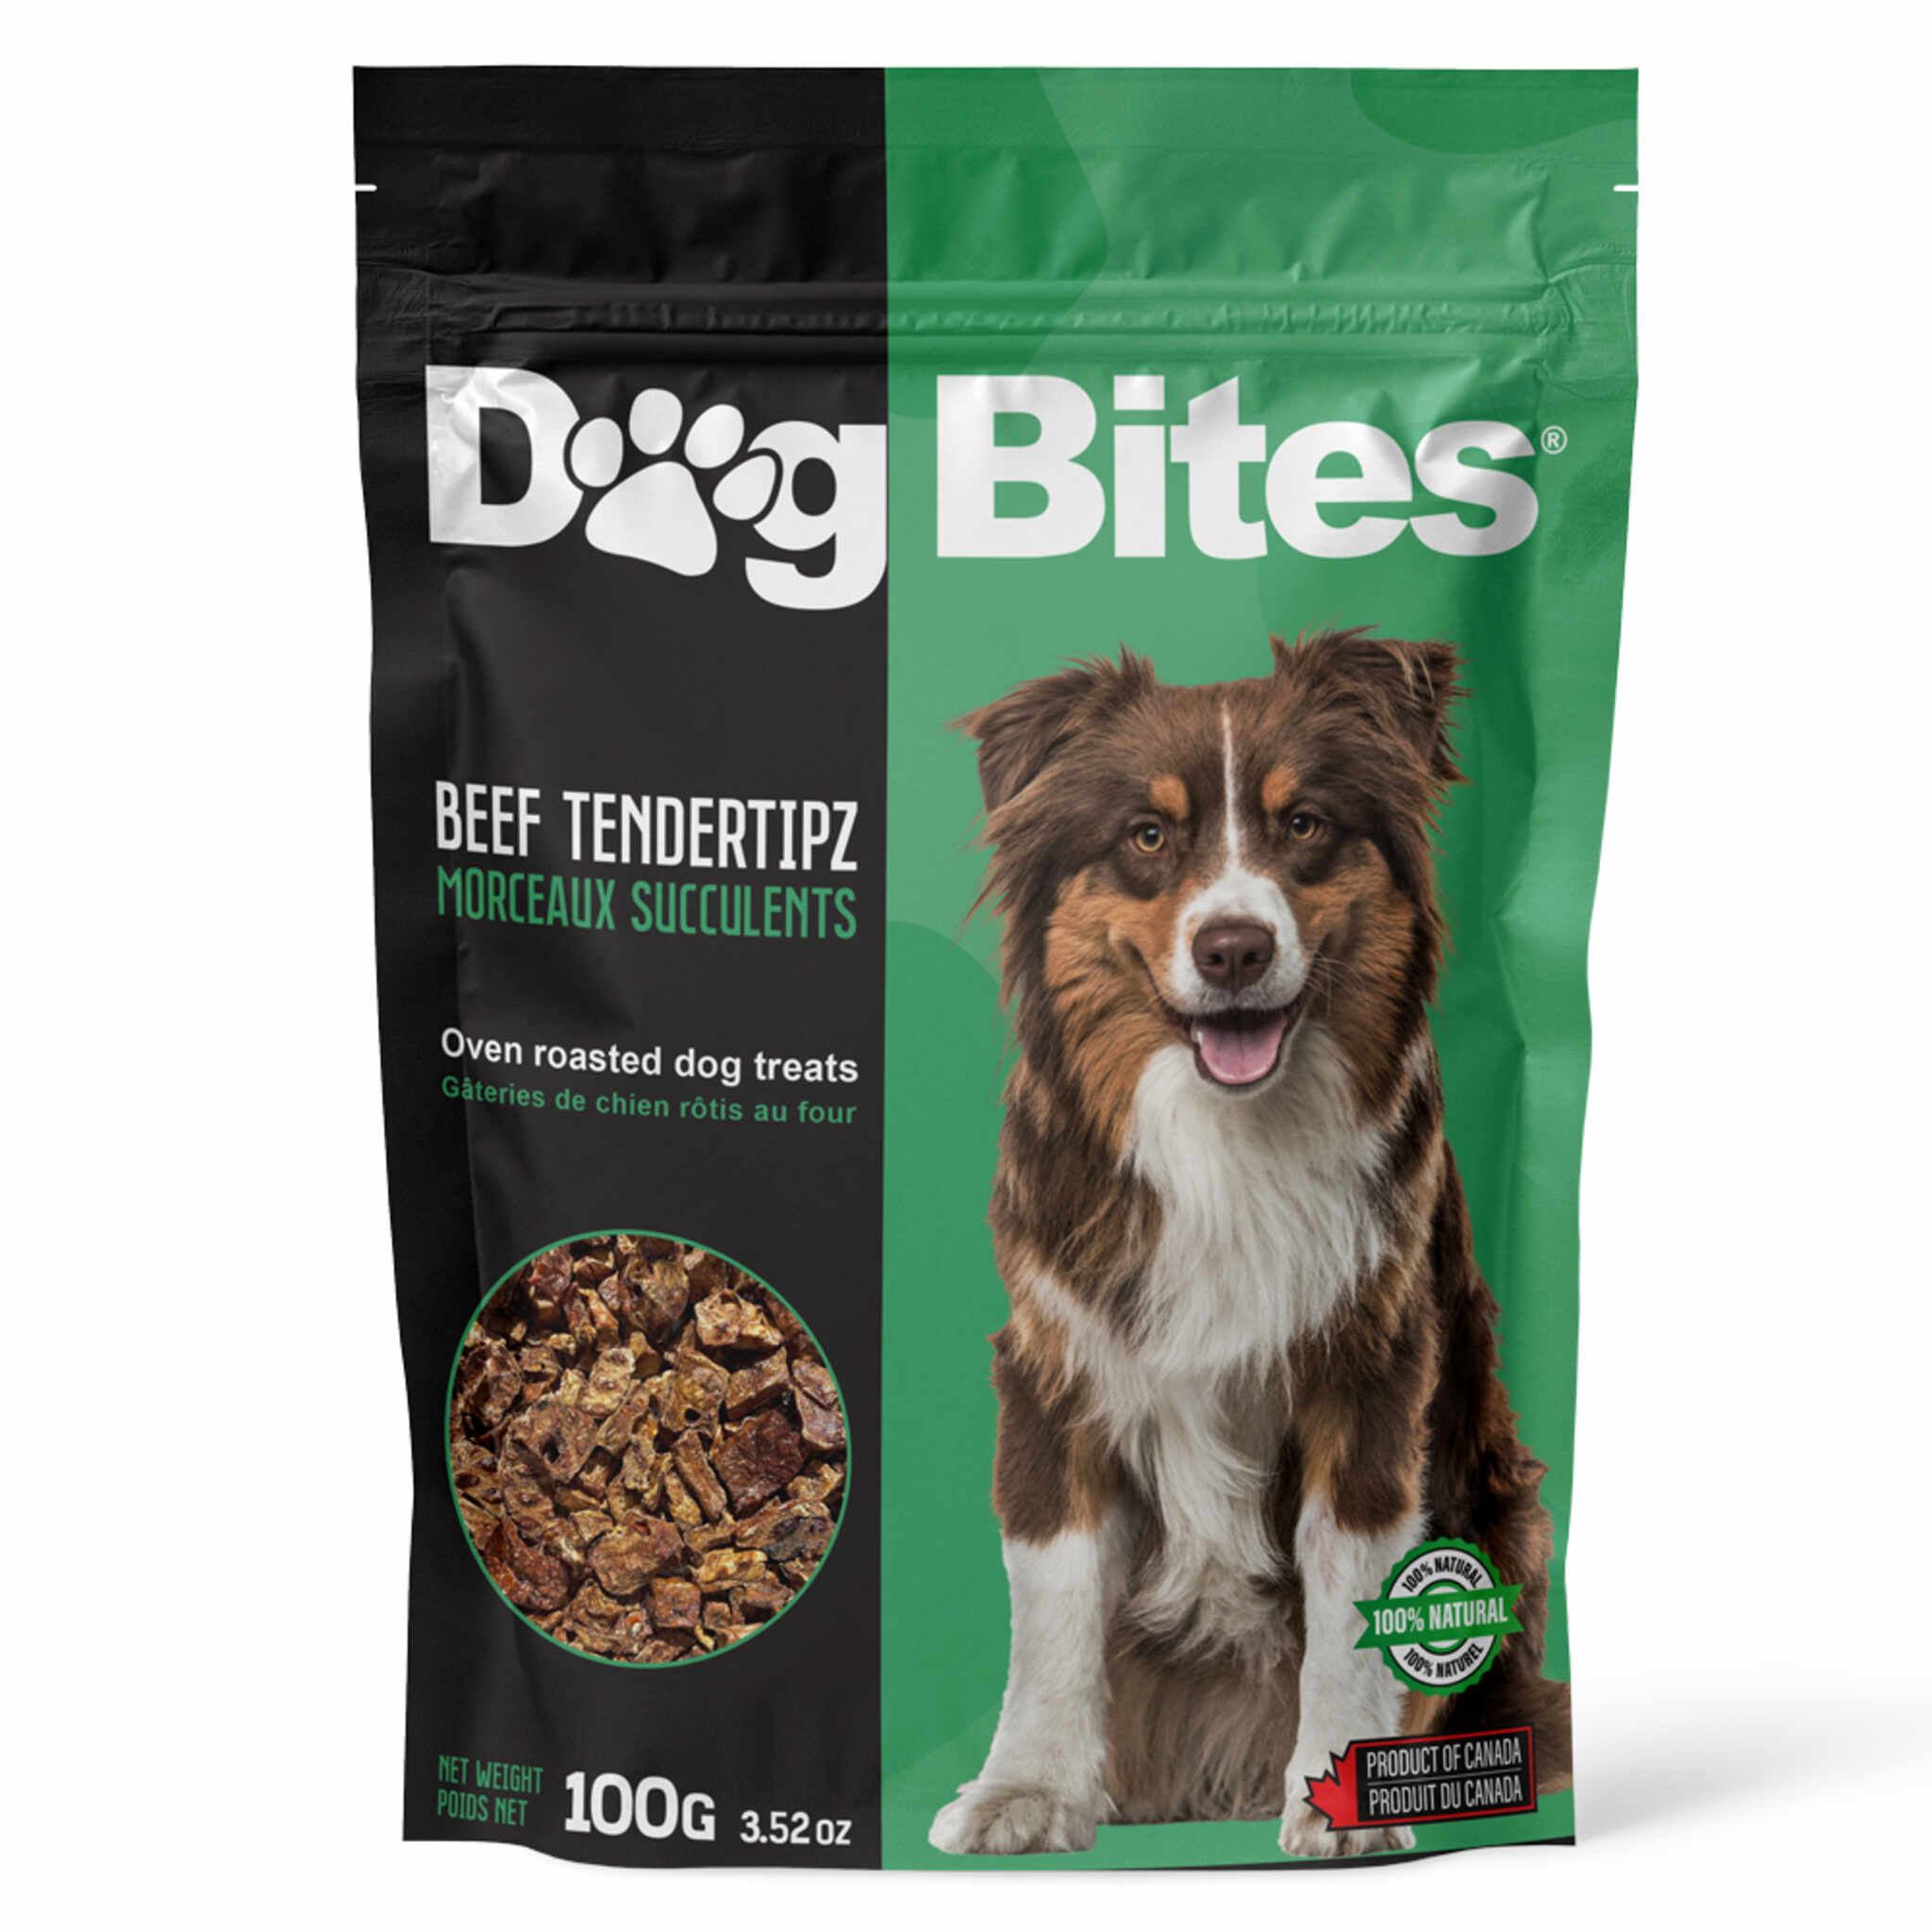 Dog Bites Freeze Dried Beef Tendertipz Dog Treats 220g